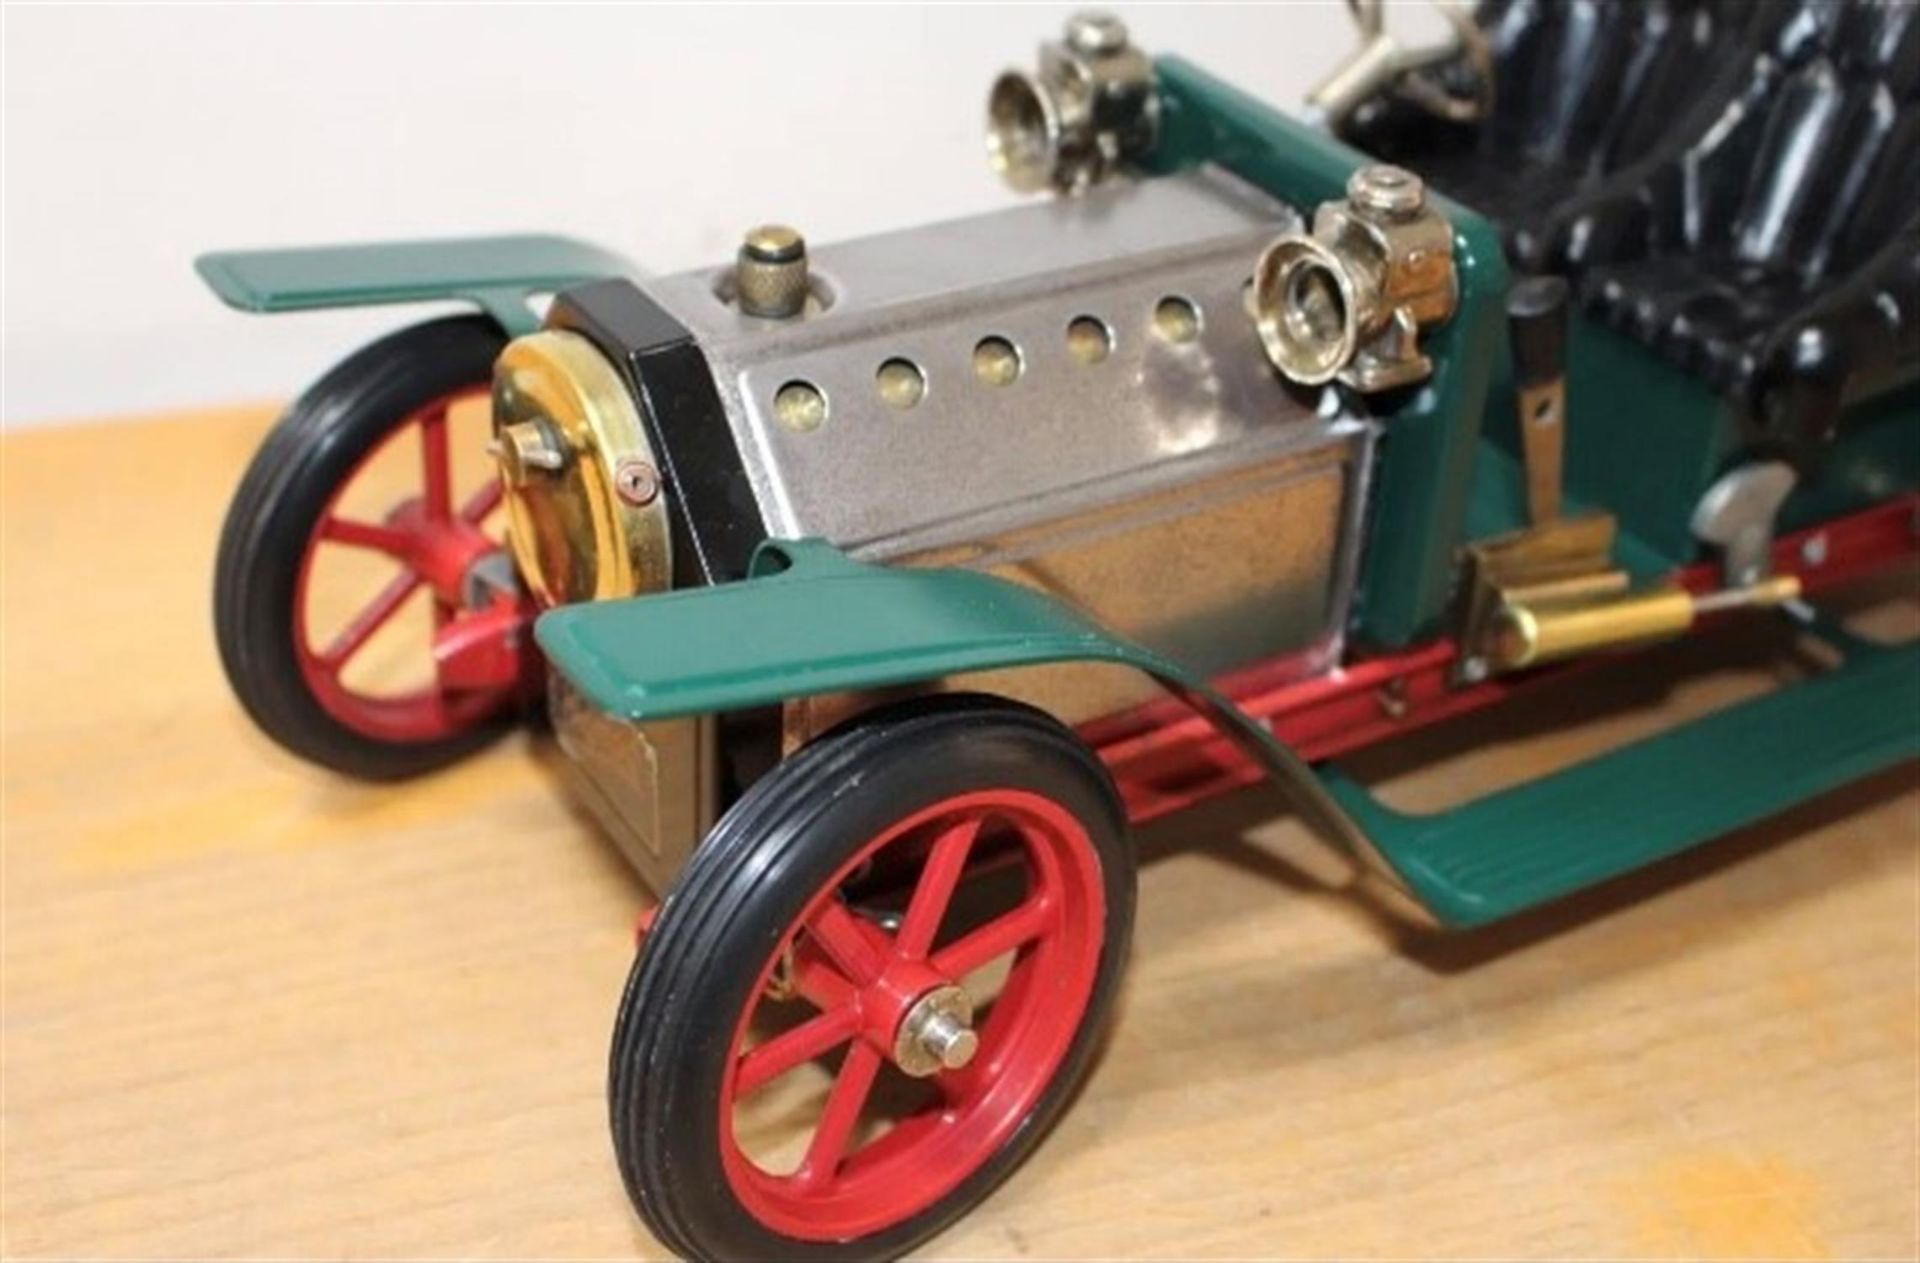 Live Steam Single-Piston Vintage Car Model - Image 2 of 3